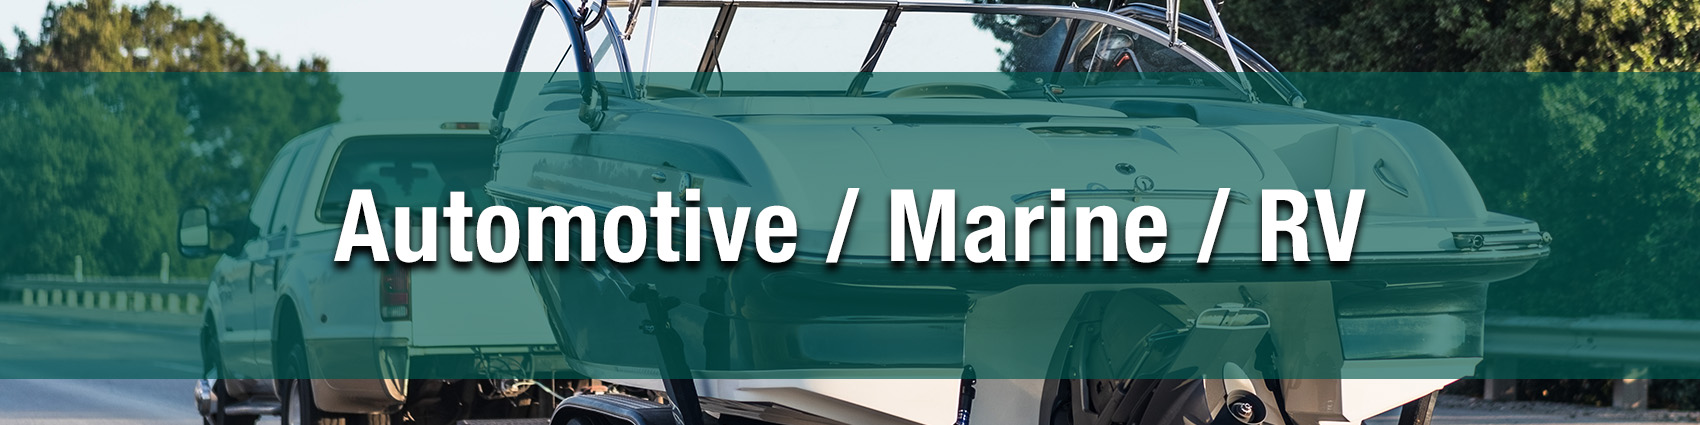 Automotive Marine RV